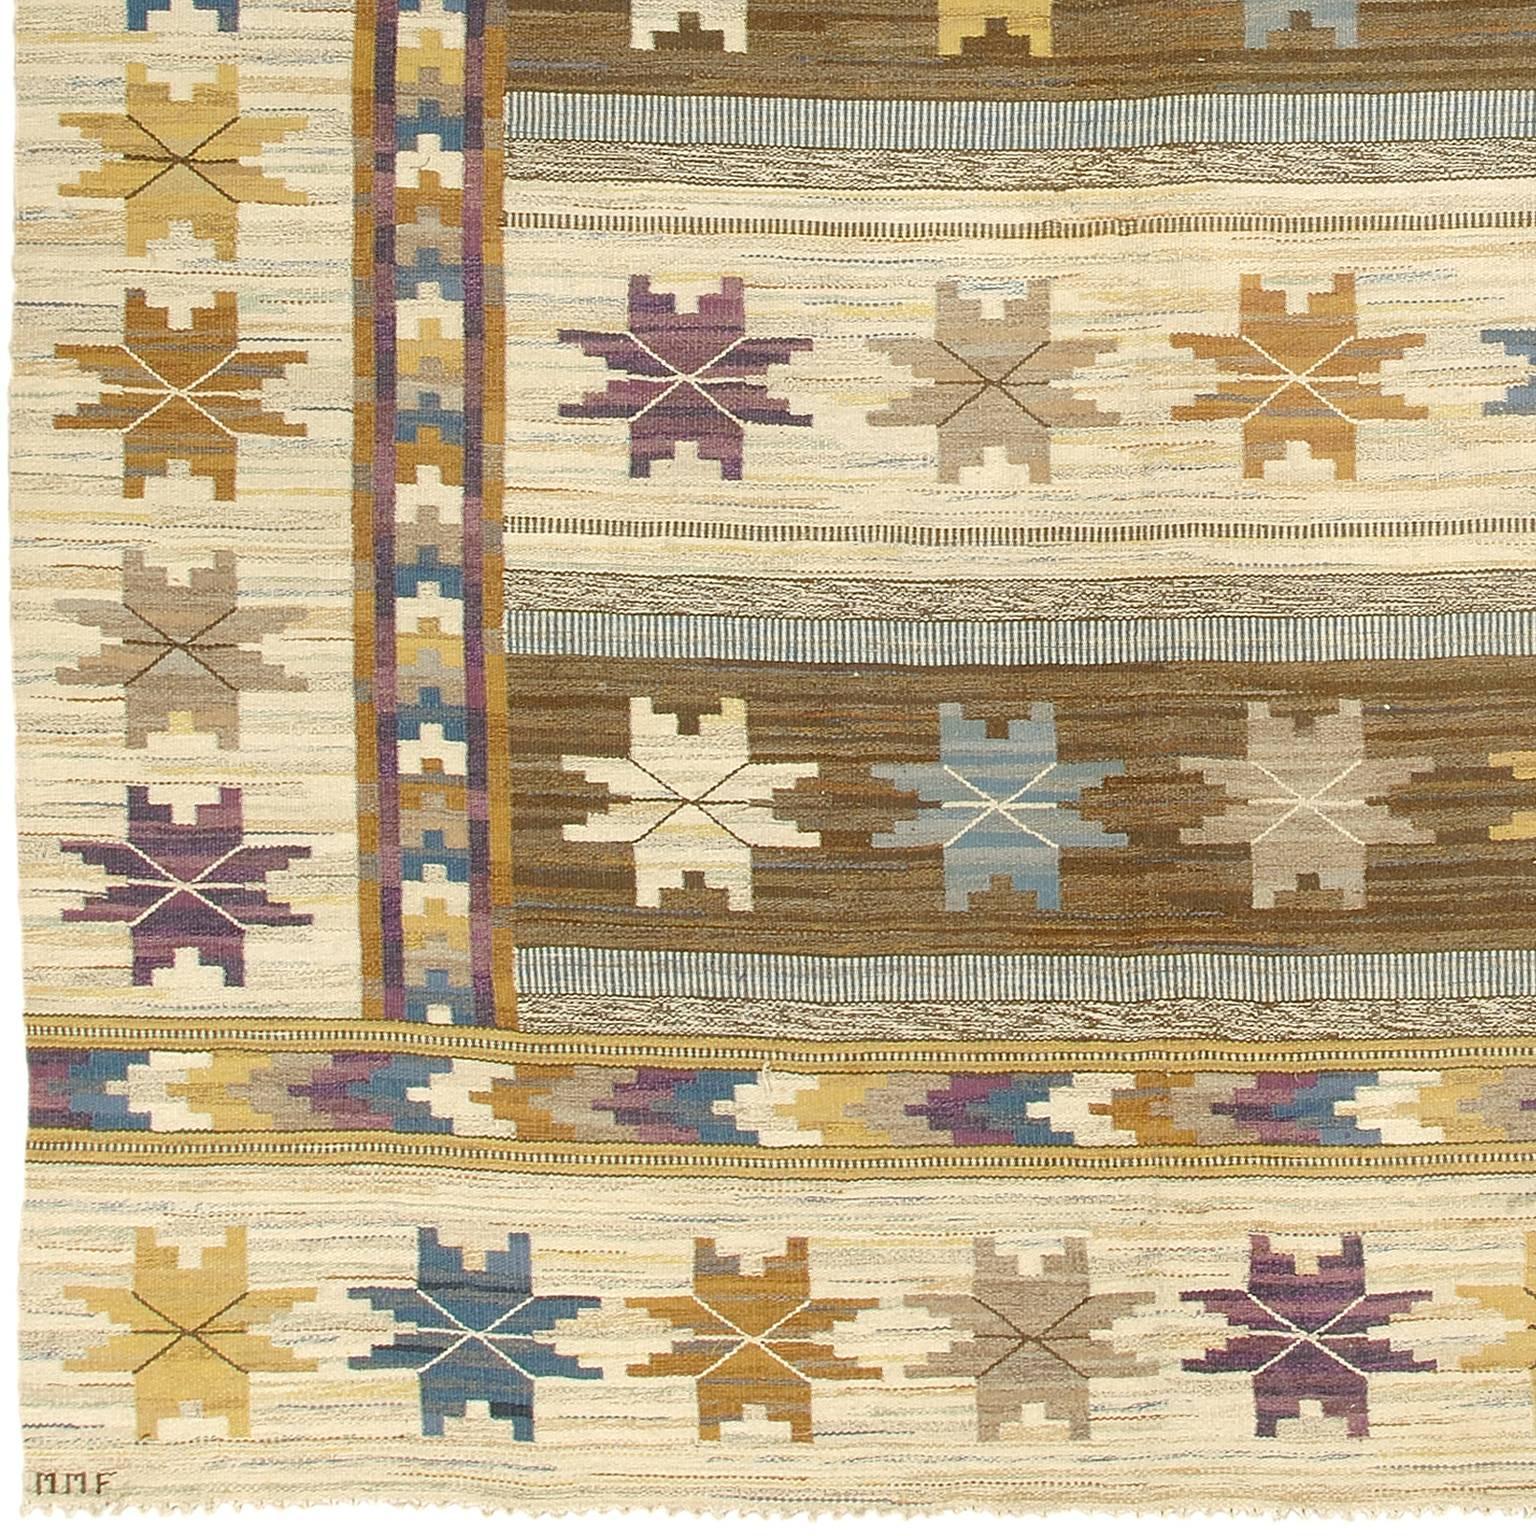 Swedish flat-weave rug by Märta Måås-Fjetterström,
Sweden, circa 1918.
Handwoven.